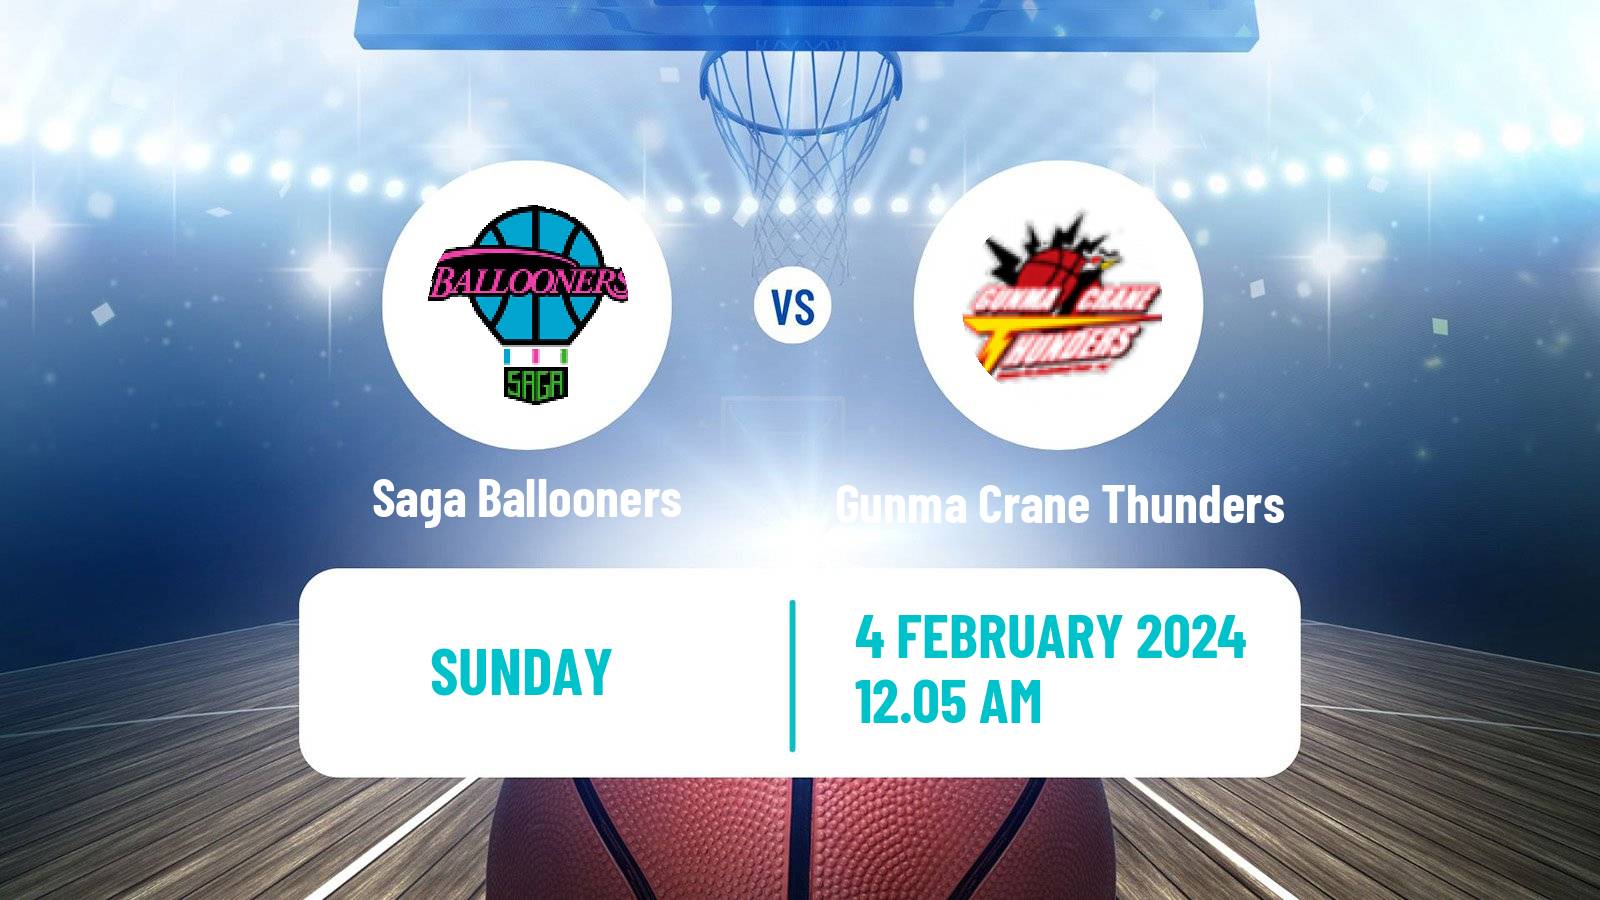 Basketball BJ League Saga Ballooners - Gunma Crane Thunders